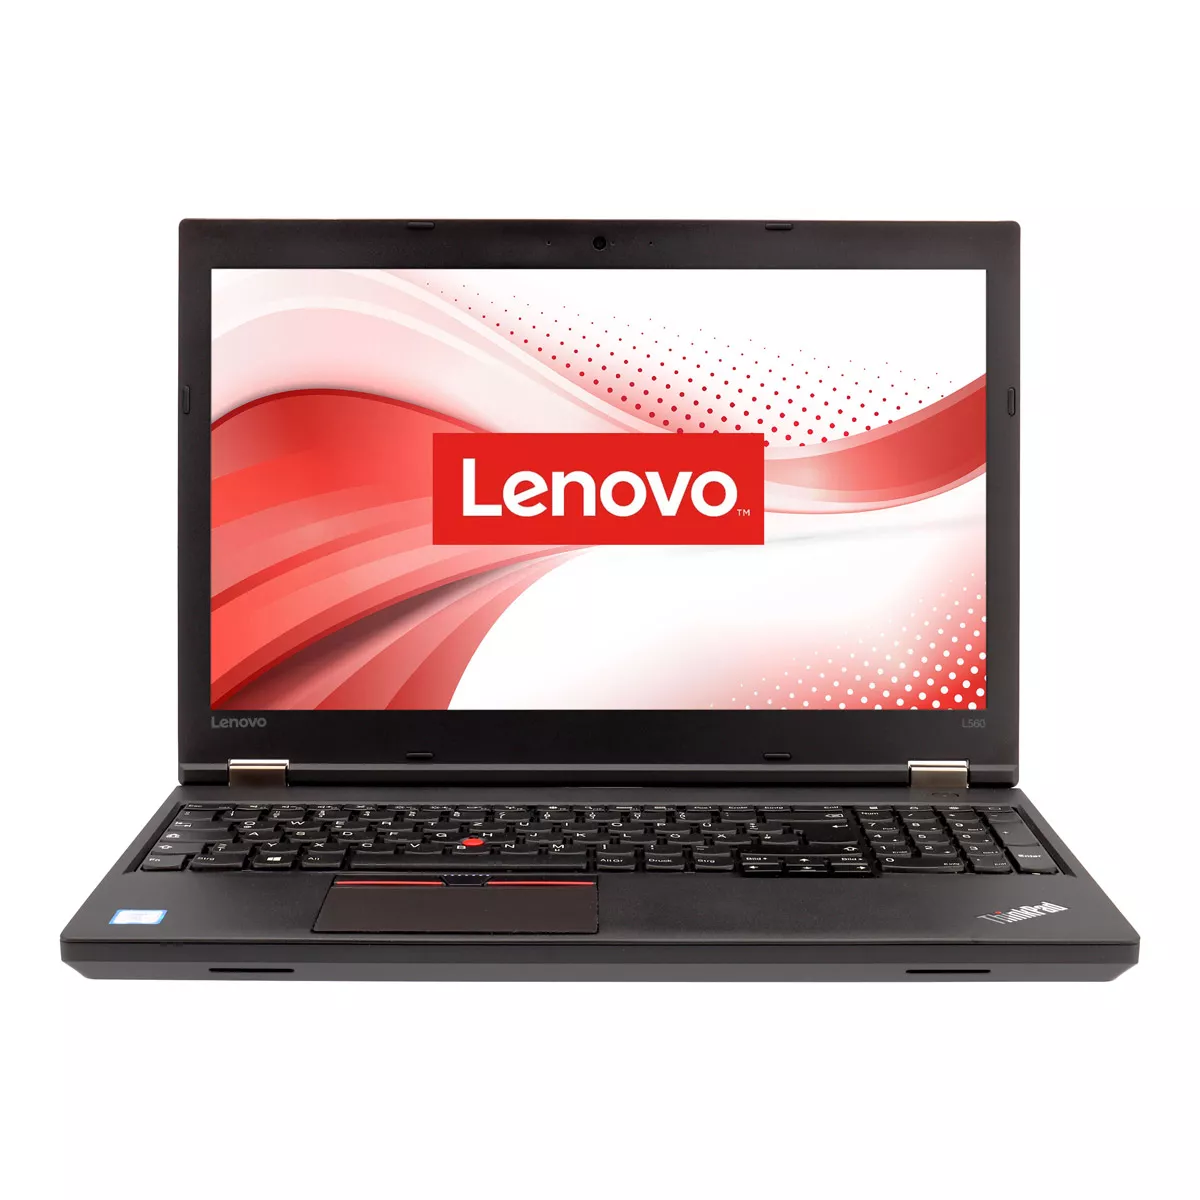 Lenovo ThinkPad L560 Core i5 6300U Full-HD 16 GB 500 GB SSD Webcam A+